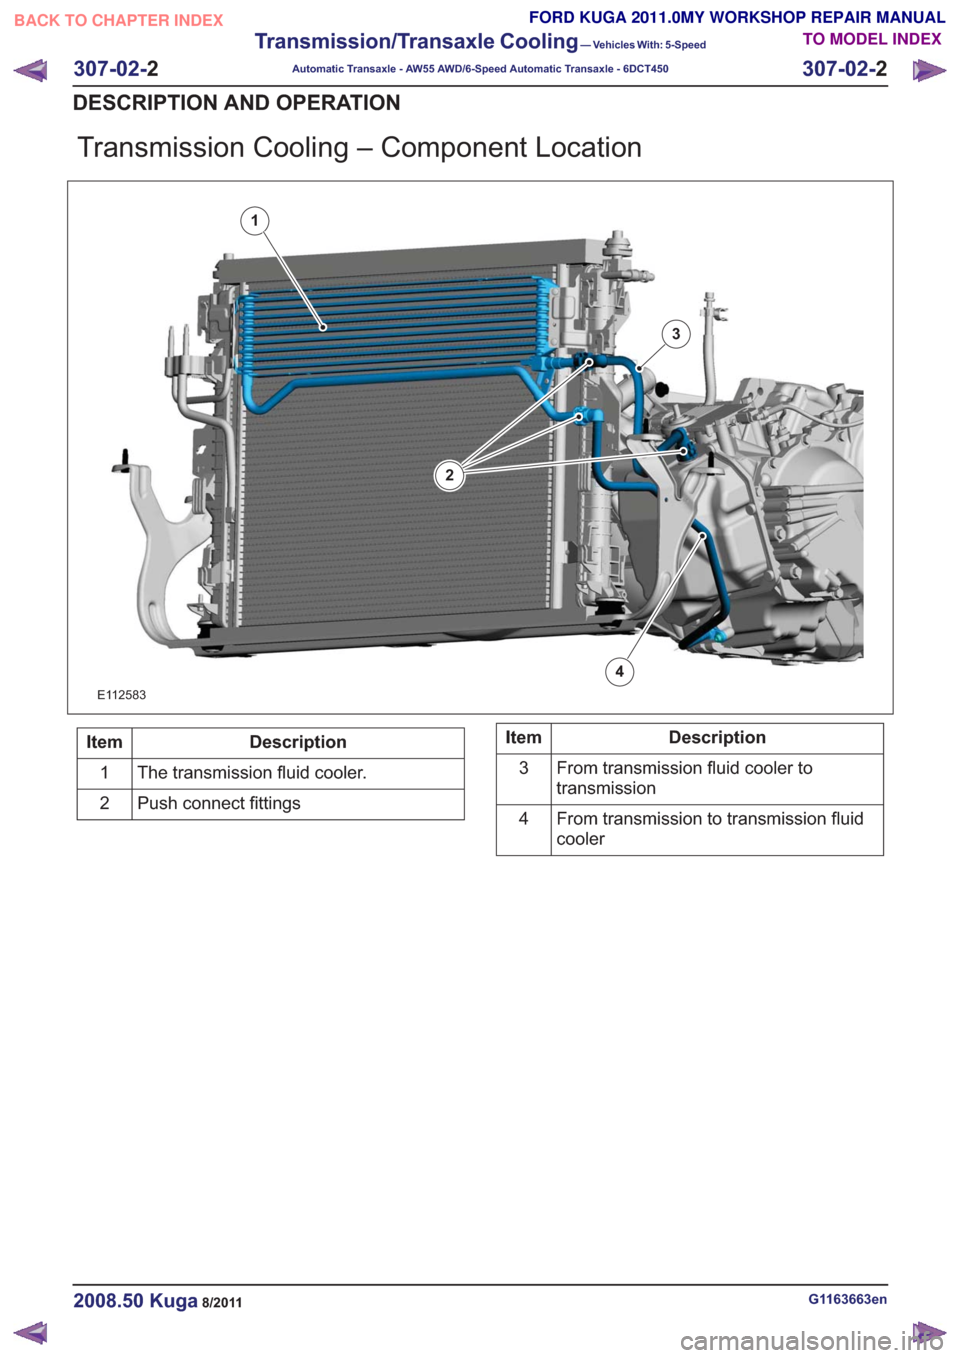 FORD KUGA 2011 1.G Workshop Manual Transmission Cooling – Component Location
1
2
3
4
E112583
Description
Item
The transmission fluid cooler.
1
Push connect fittings
2Description
Item
From transmission fluid cooler to
transmission
3
F